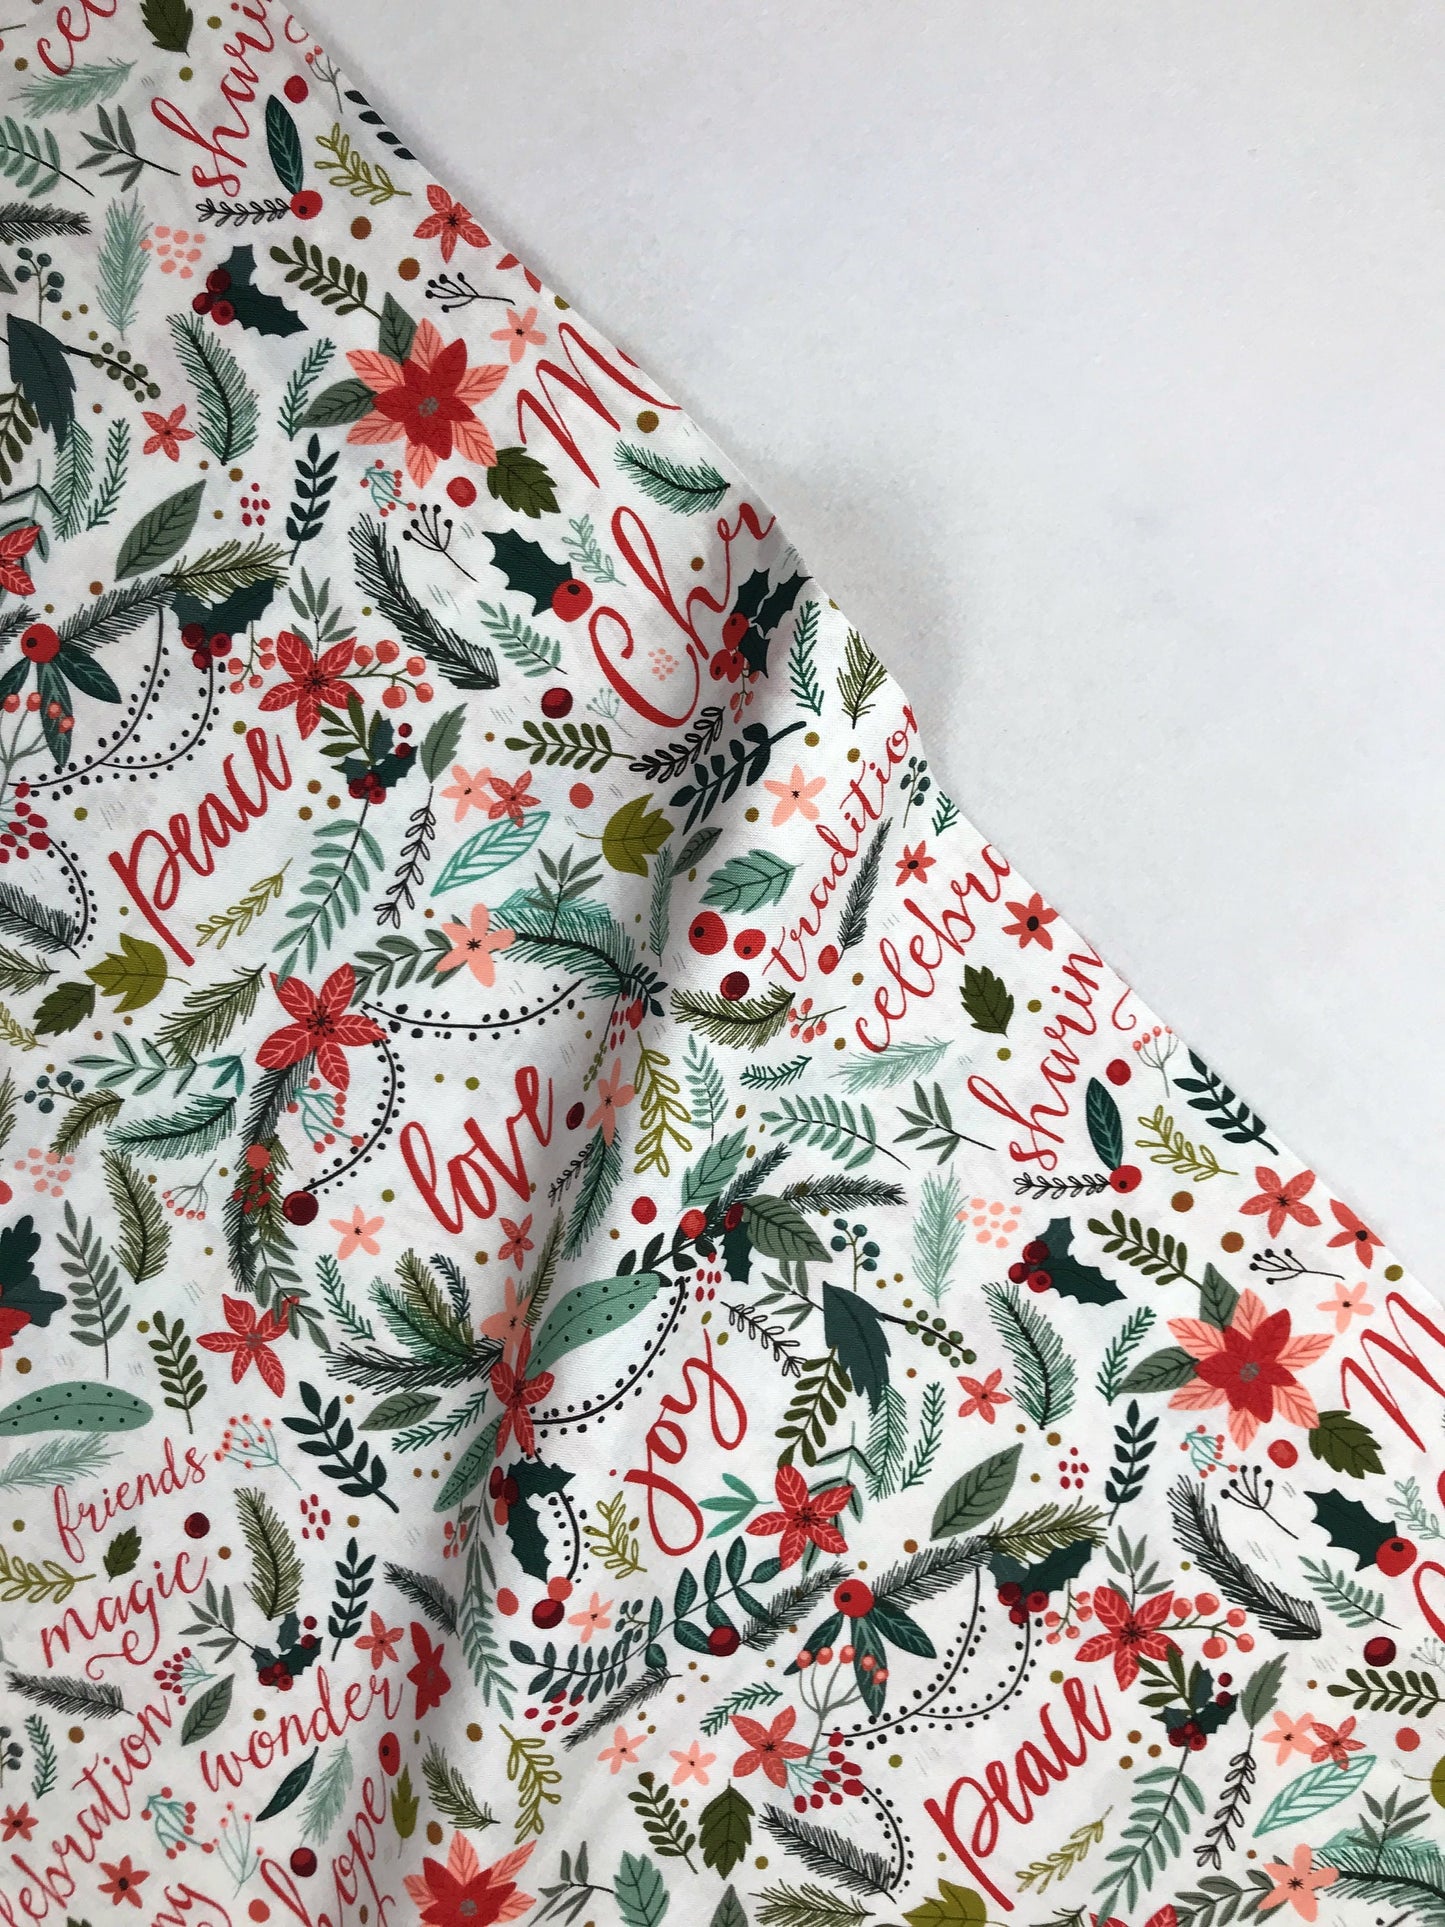 Family Wishes Ivory Christmas Squad Mia Charro Freespirit Fabrics 100% Quilters Cotton Fabric Fetish